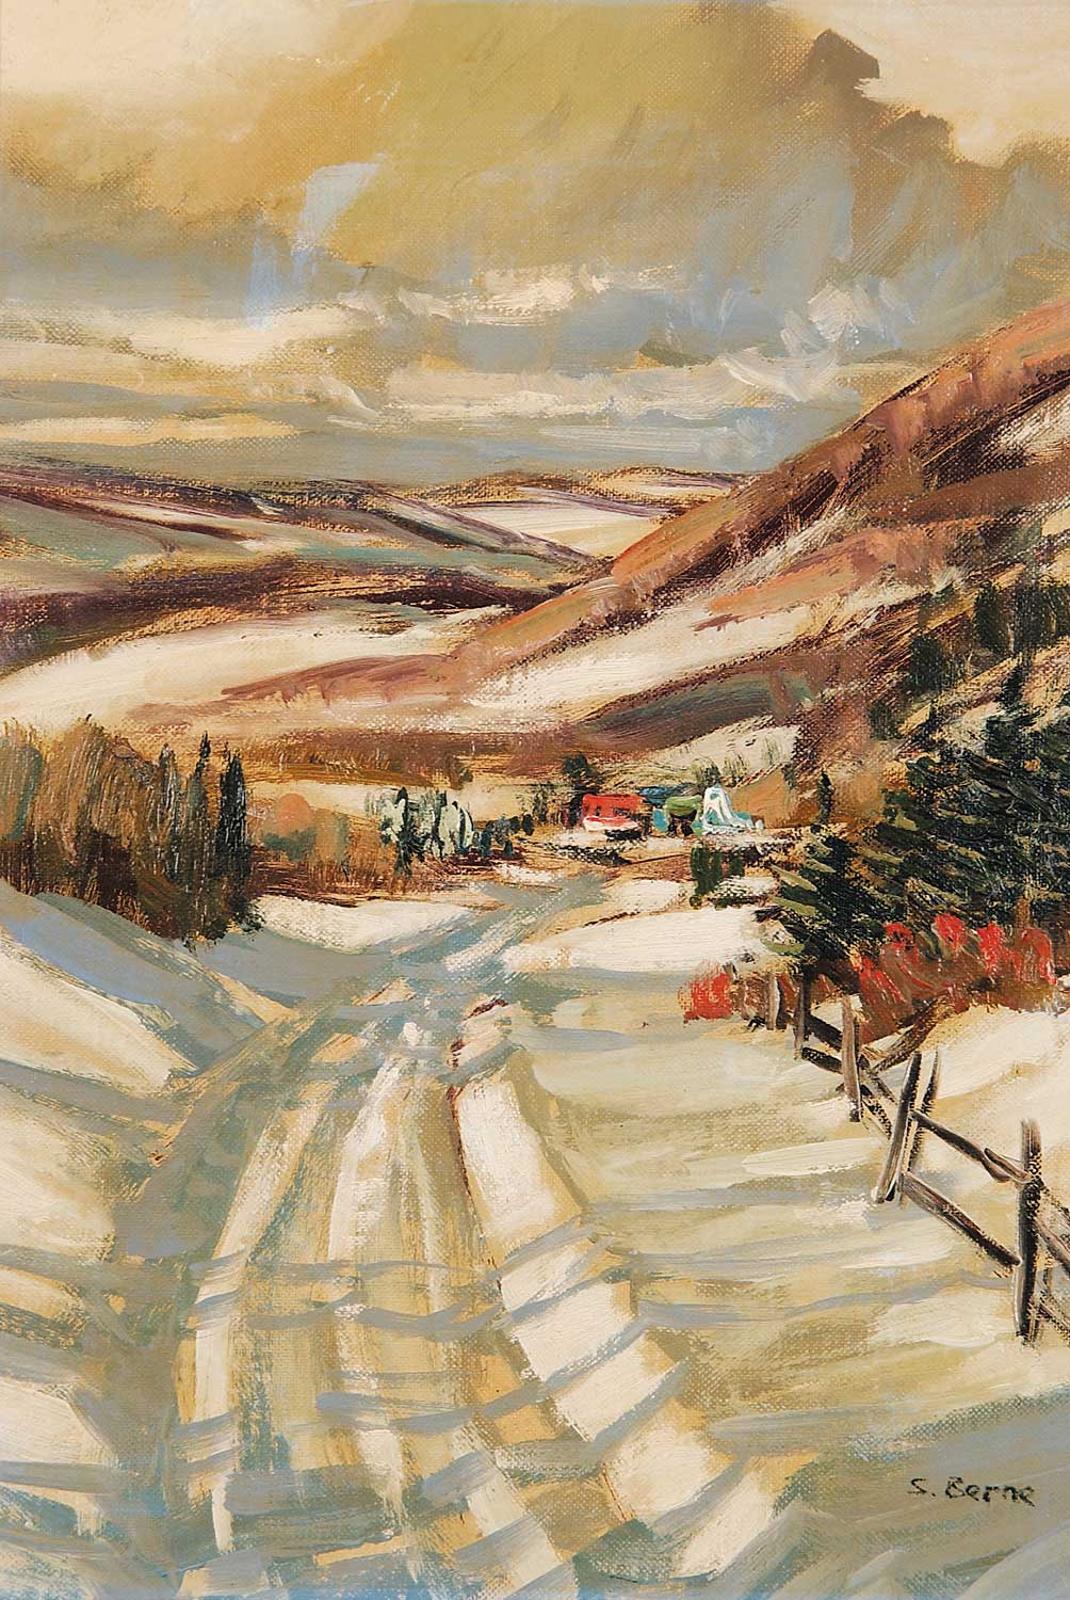 Sydney Martin Berne (1921-2013) - Snowy Winter Road, Laurentians